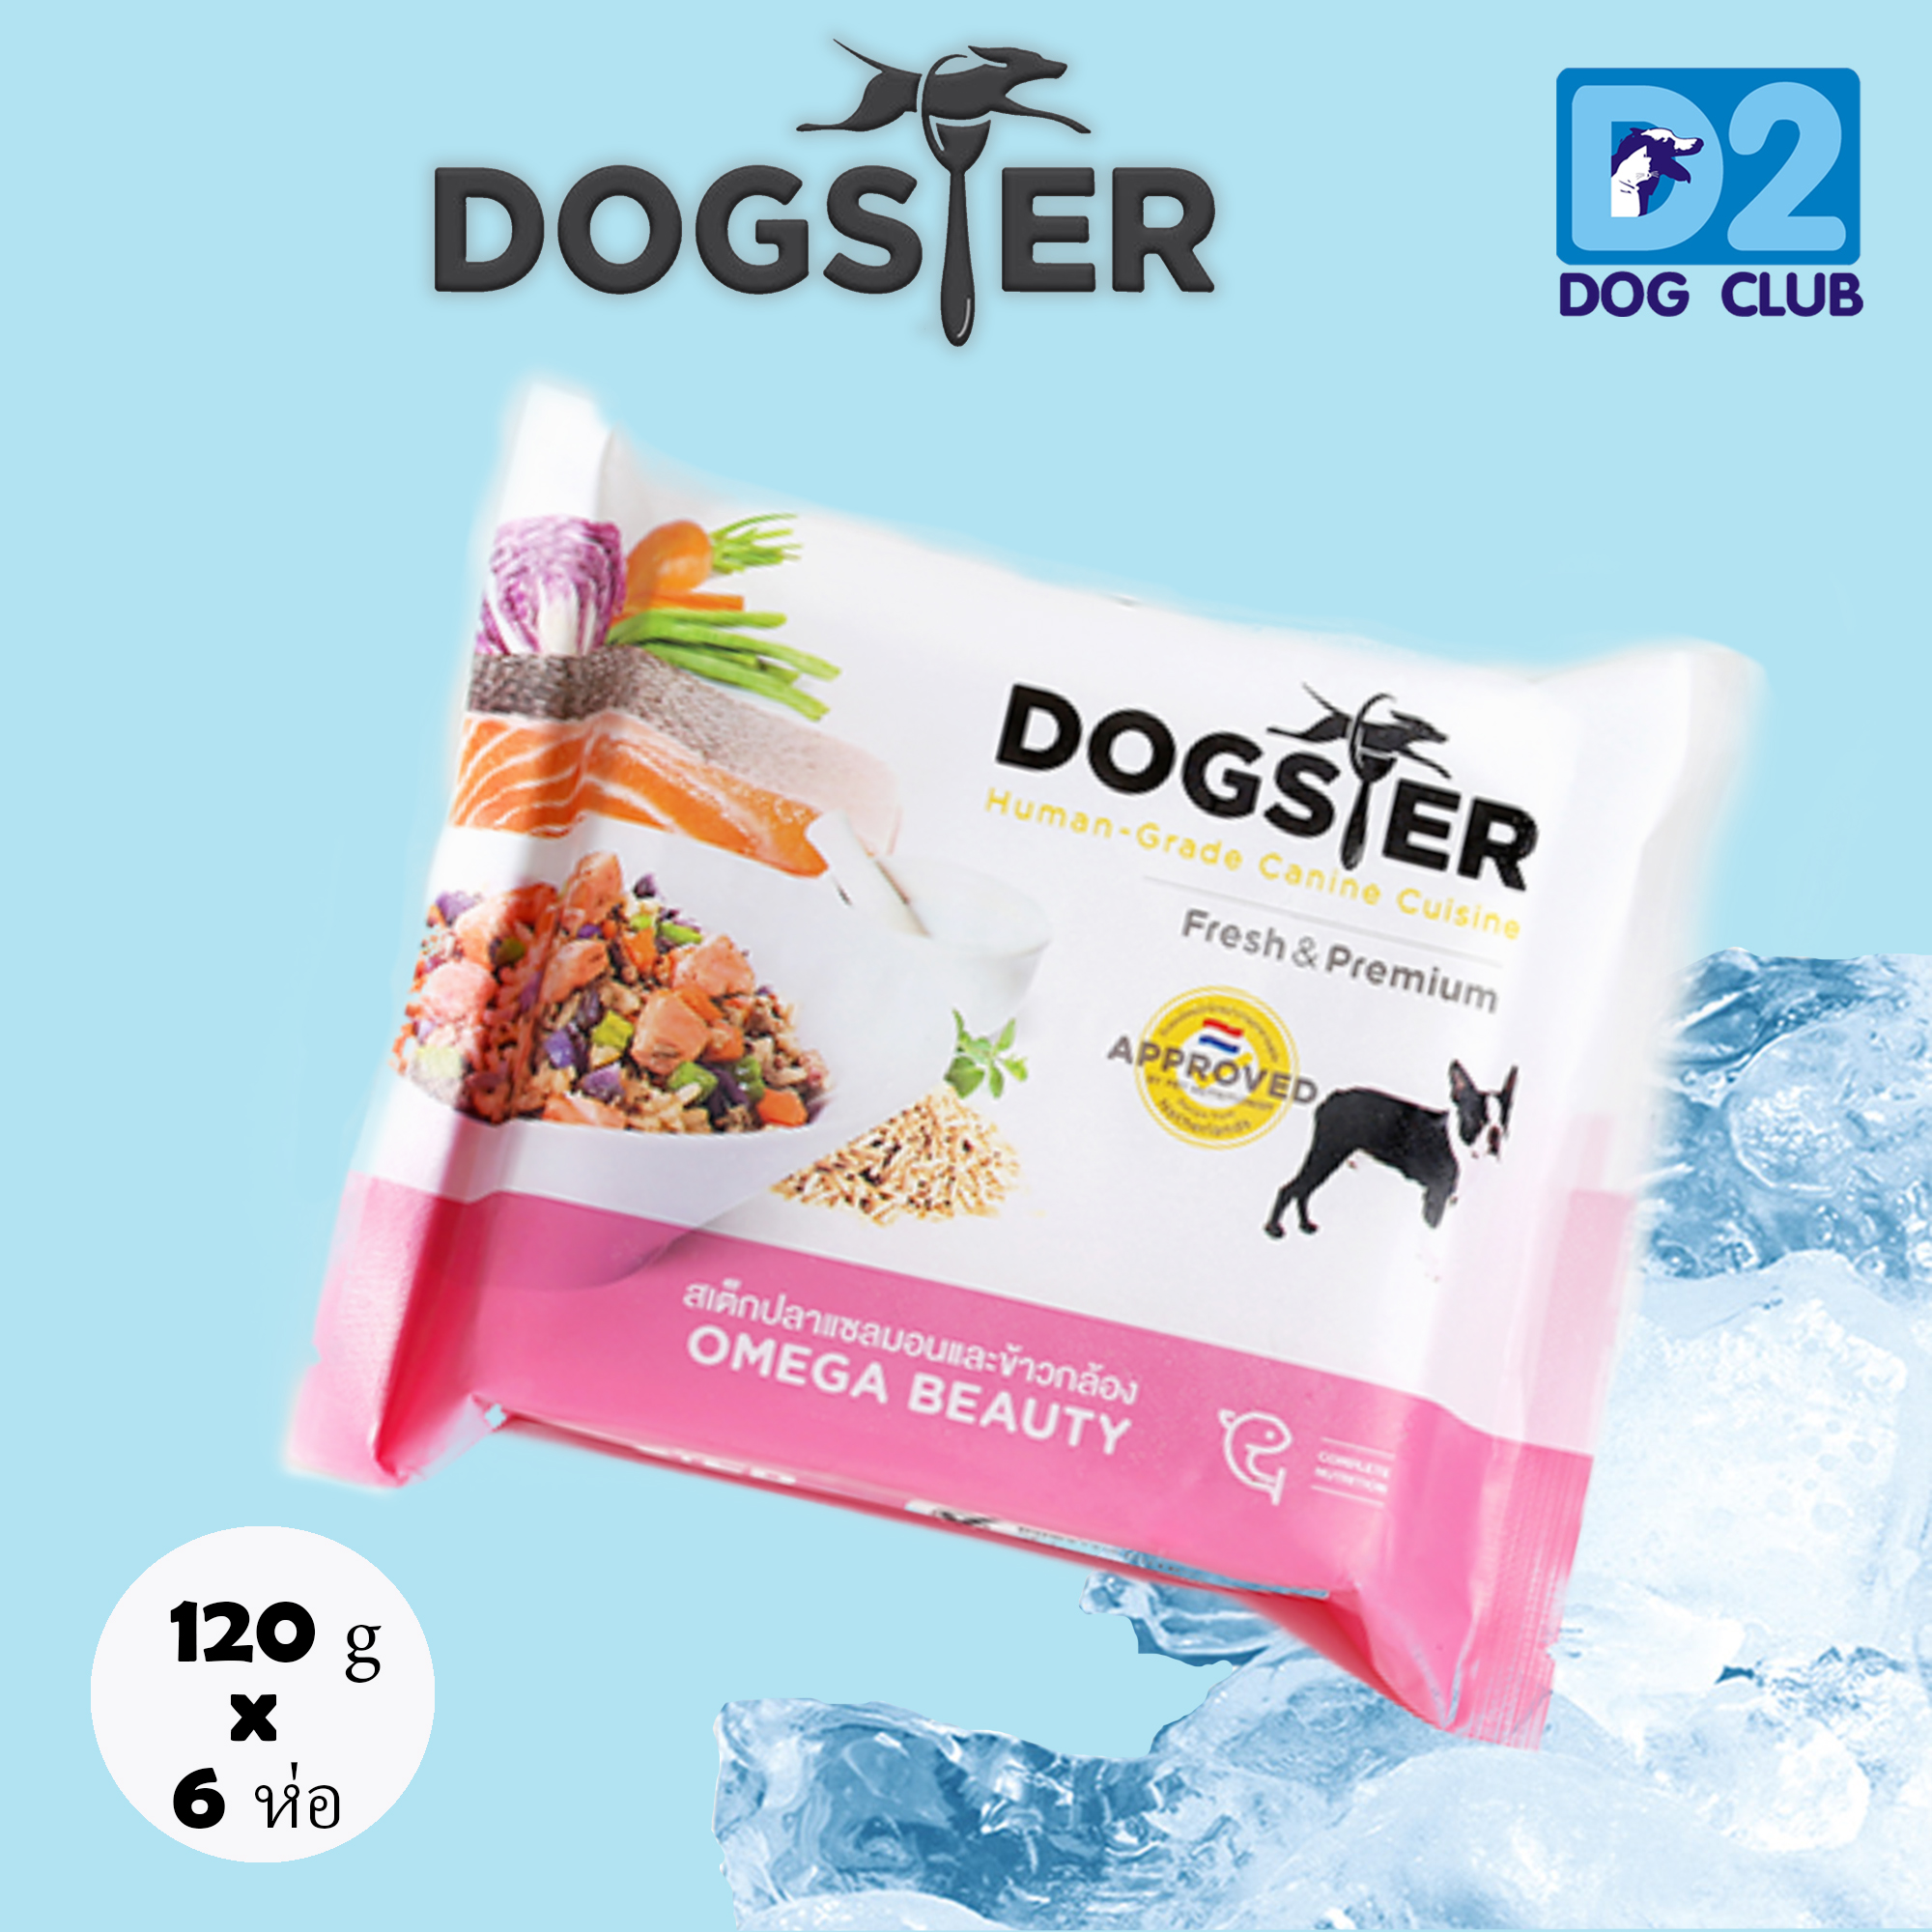 Dogster Dog Food Frozen Salmon อาหารสุนัข อาหารสุนัข แช่แข็ง สเต๊กปลาแซลมอนและข้าวกล้อง 120g X 6 ห่อ